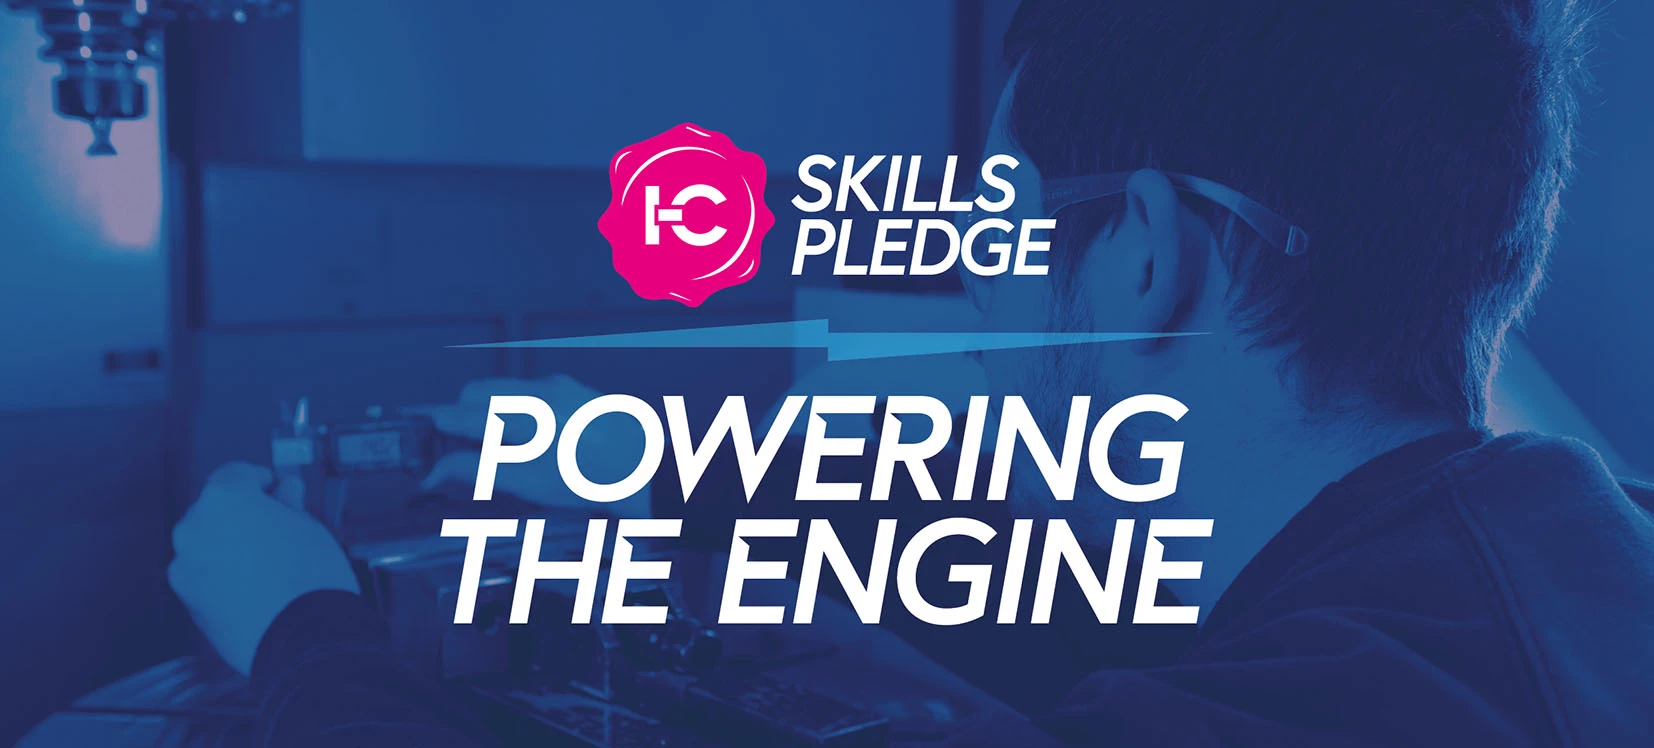 Skills Pledge 2020